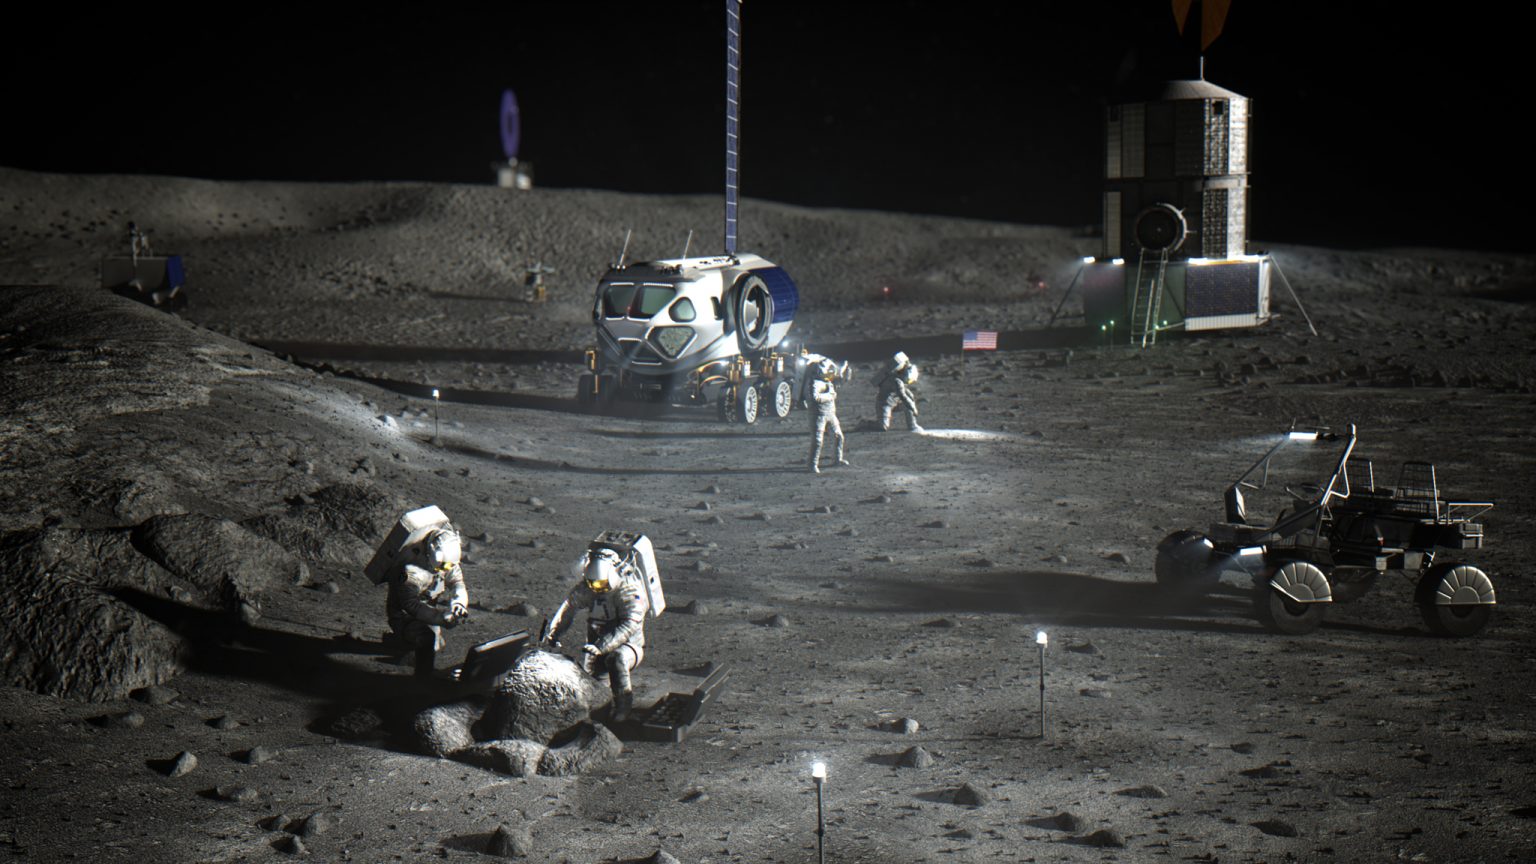 Illustration of astronauts on lunar surface